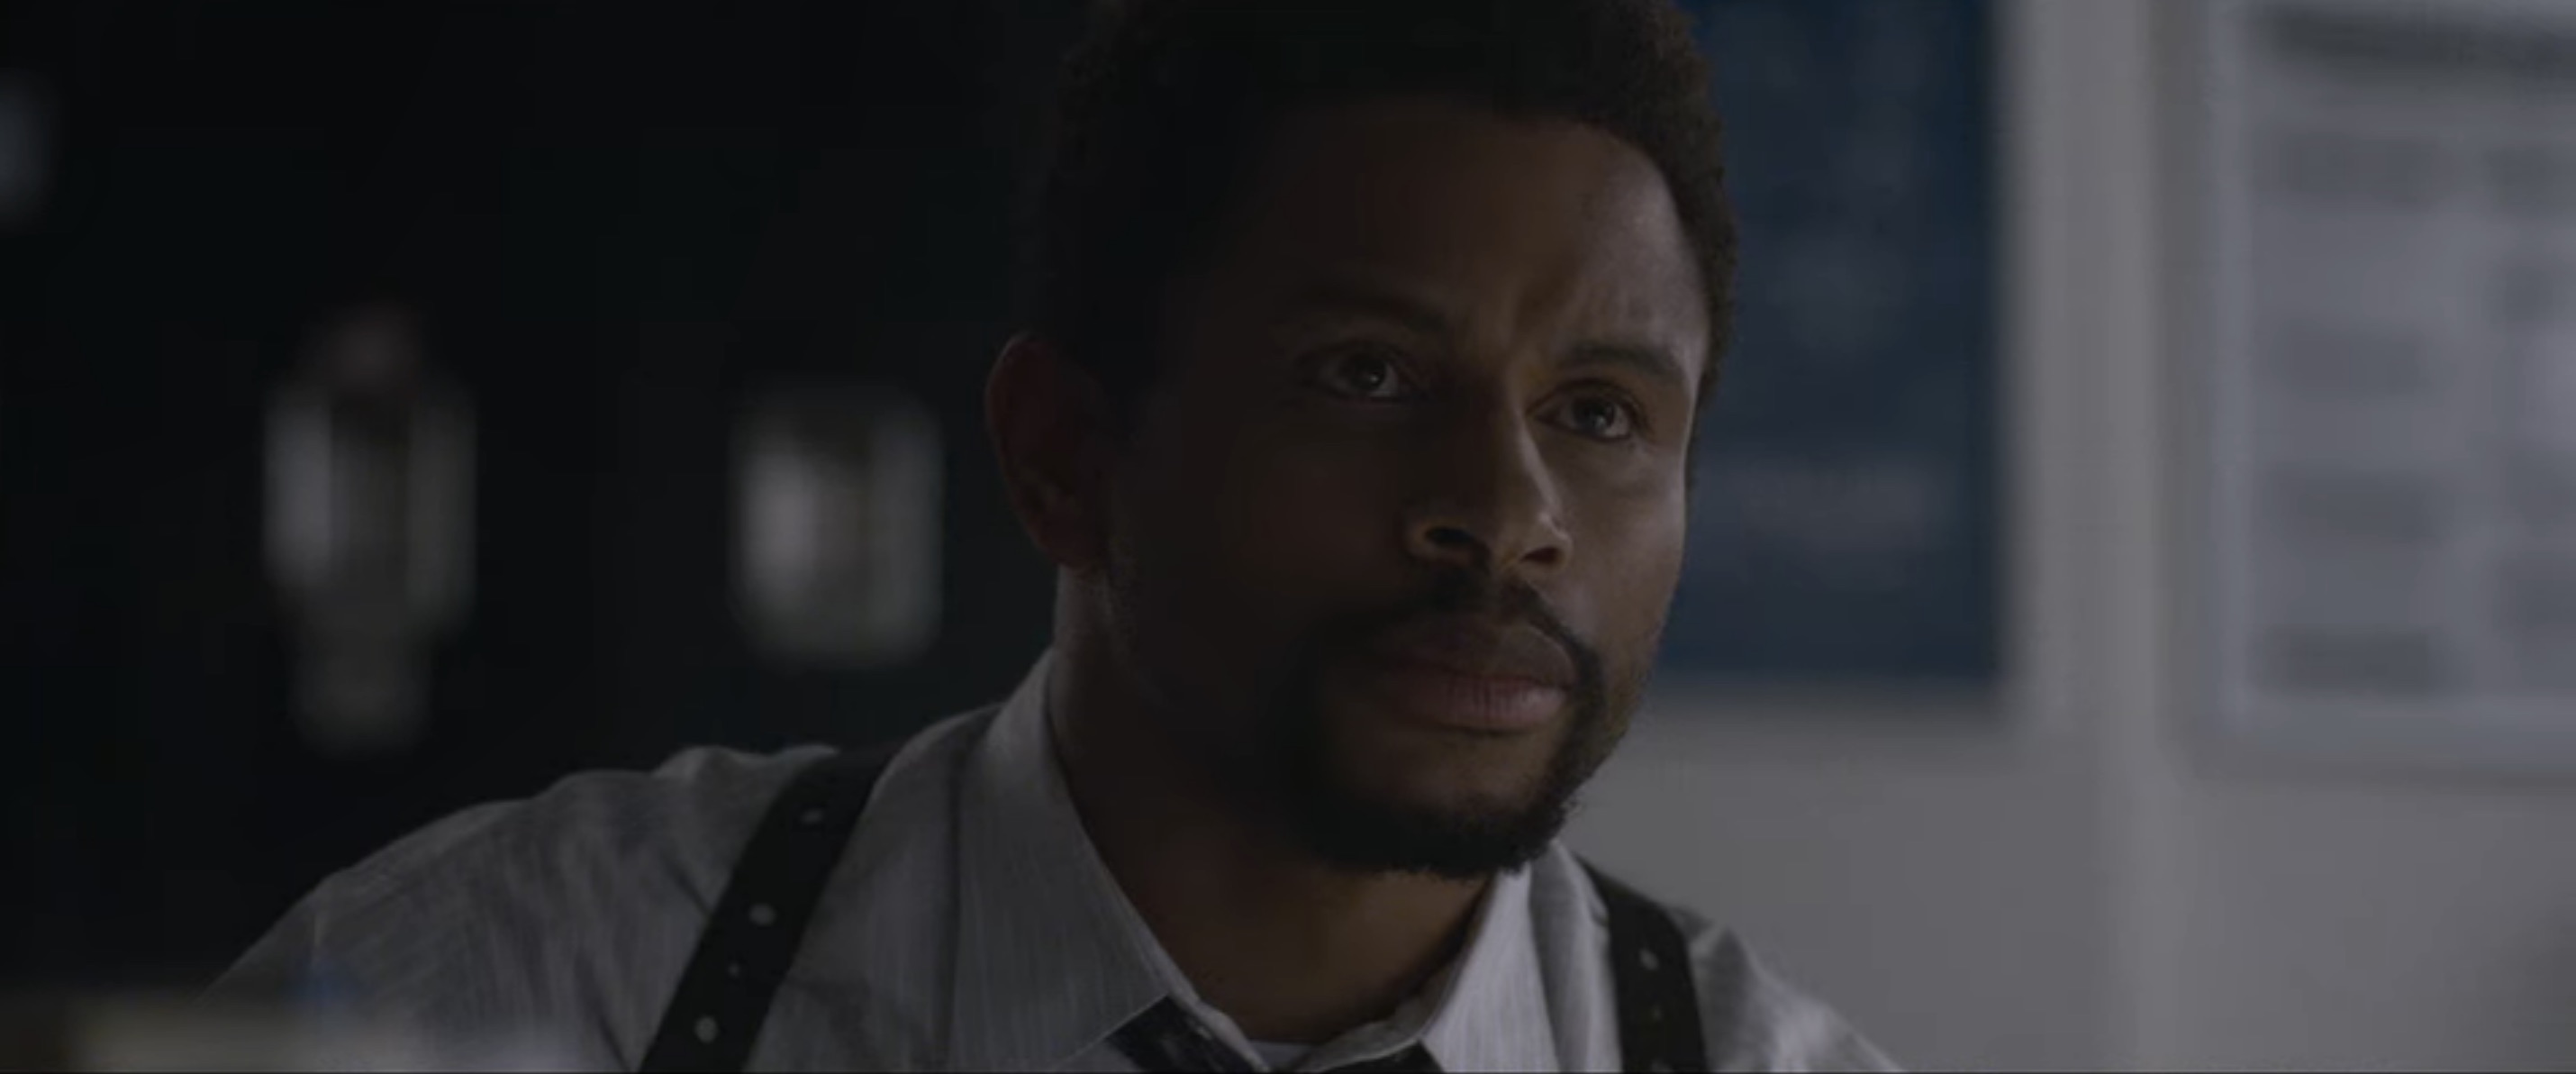 The Good Nurse Cast on Netflix - Nnamdi Asomugha as Danny Baldwin